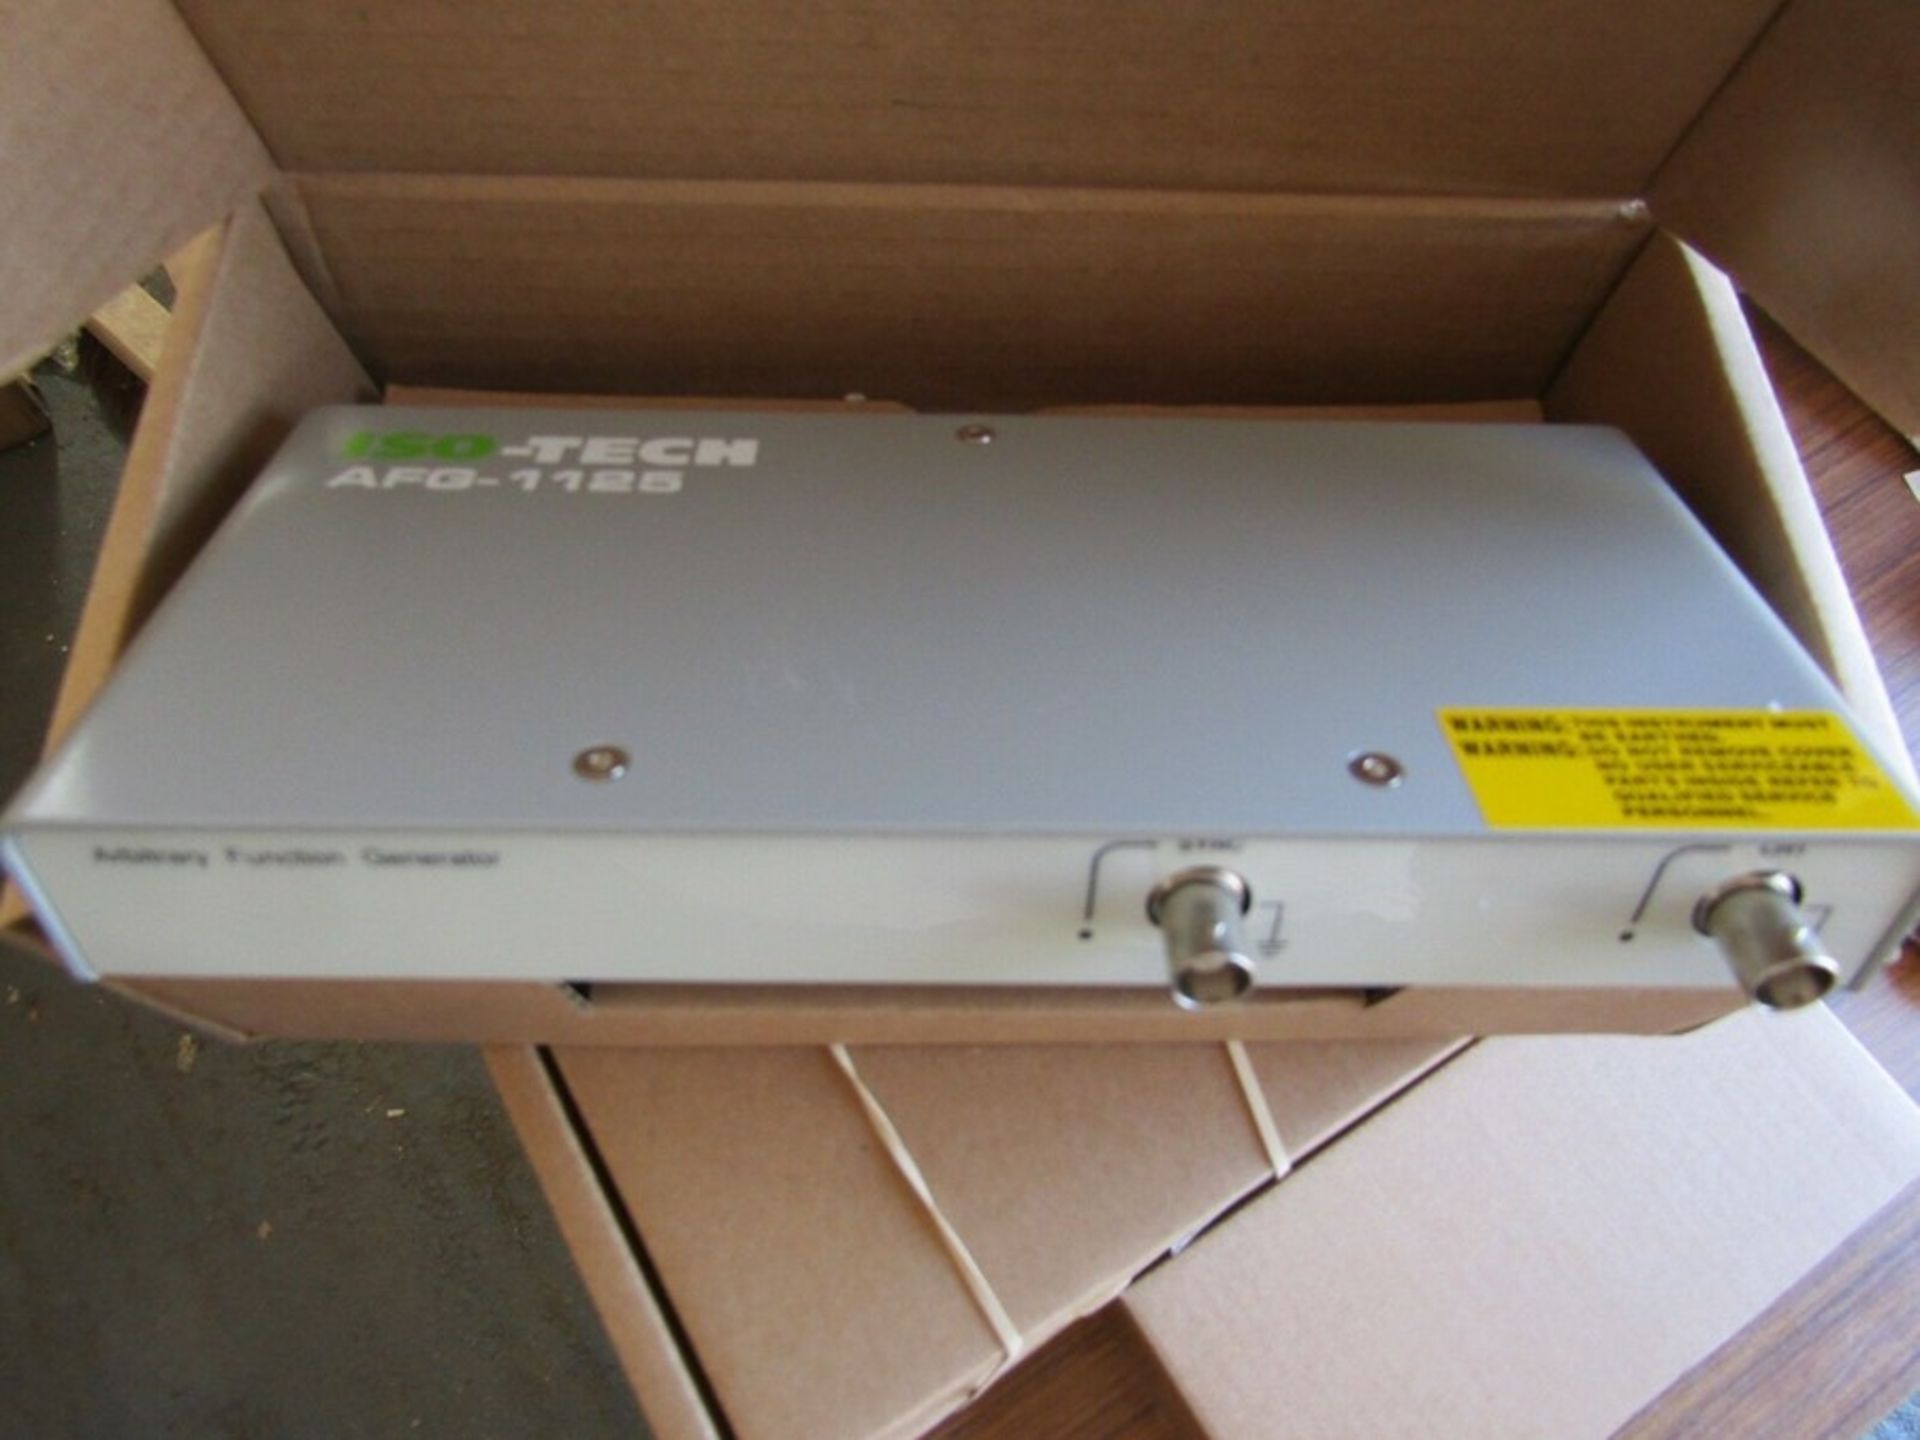 ISO-TECH AFG-1125 USB Modular Arbitrary Waveform Generator 25MHz